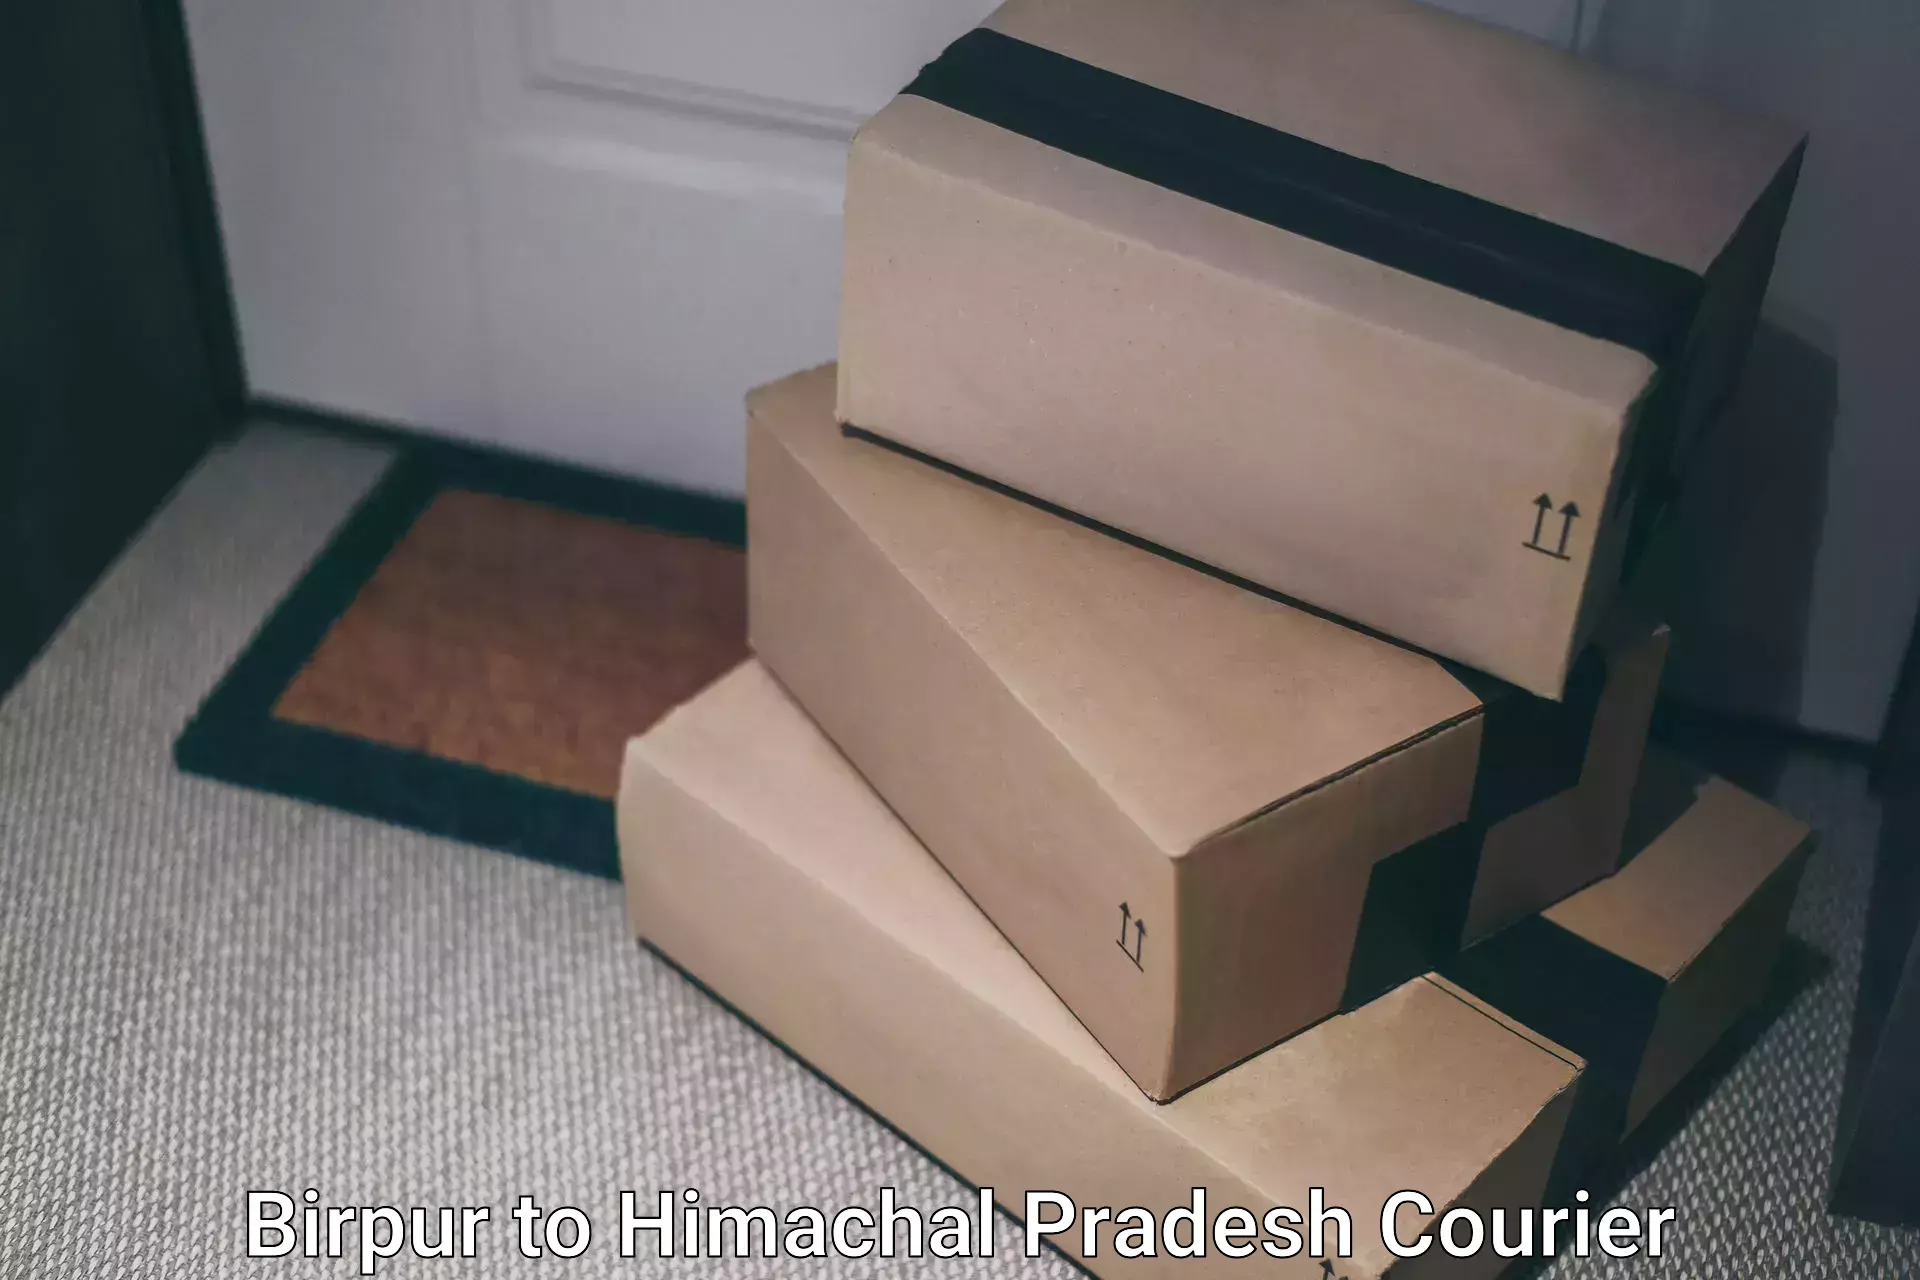 Efficient order fulfillment Birpur to Himachal Pradesh